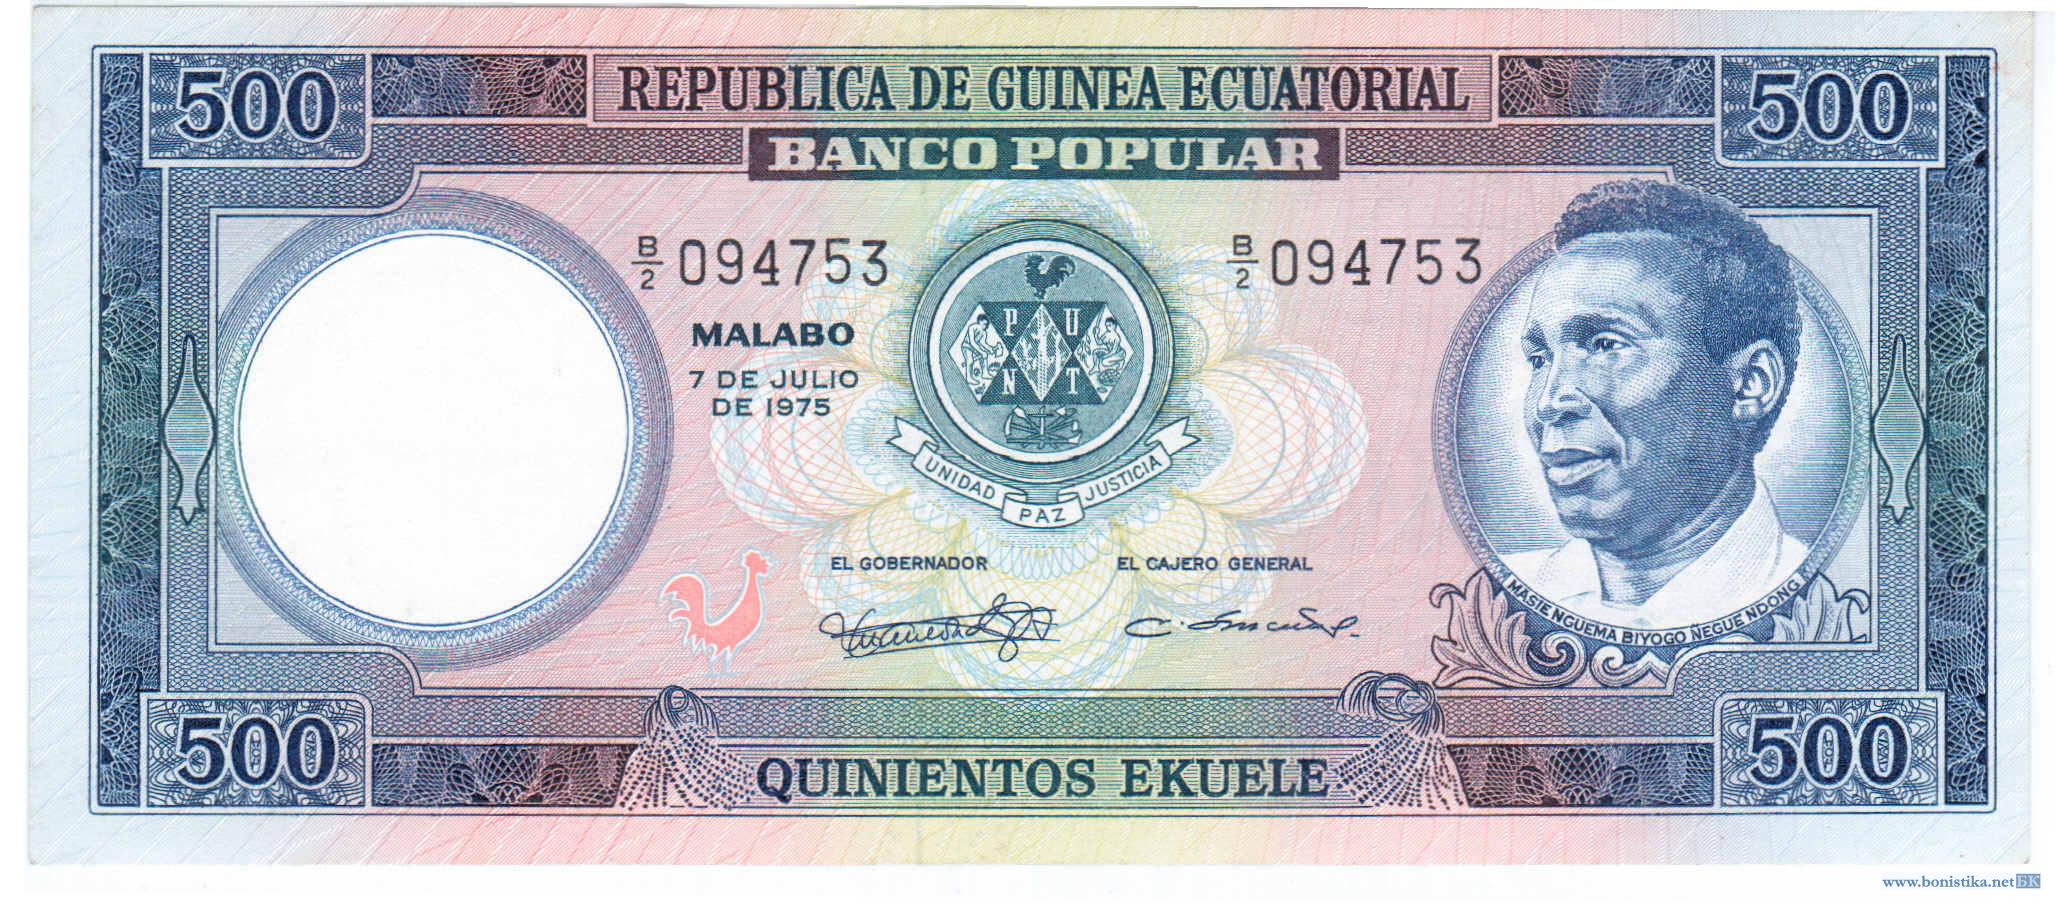 2. Банкнота.jpg